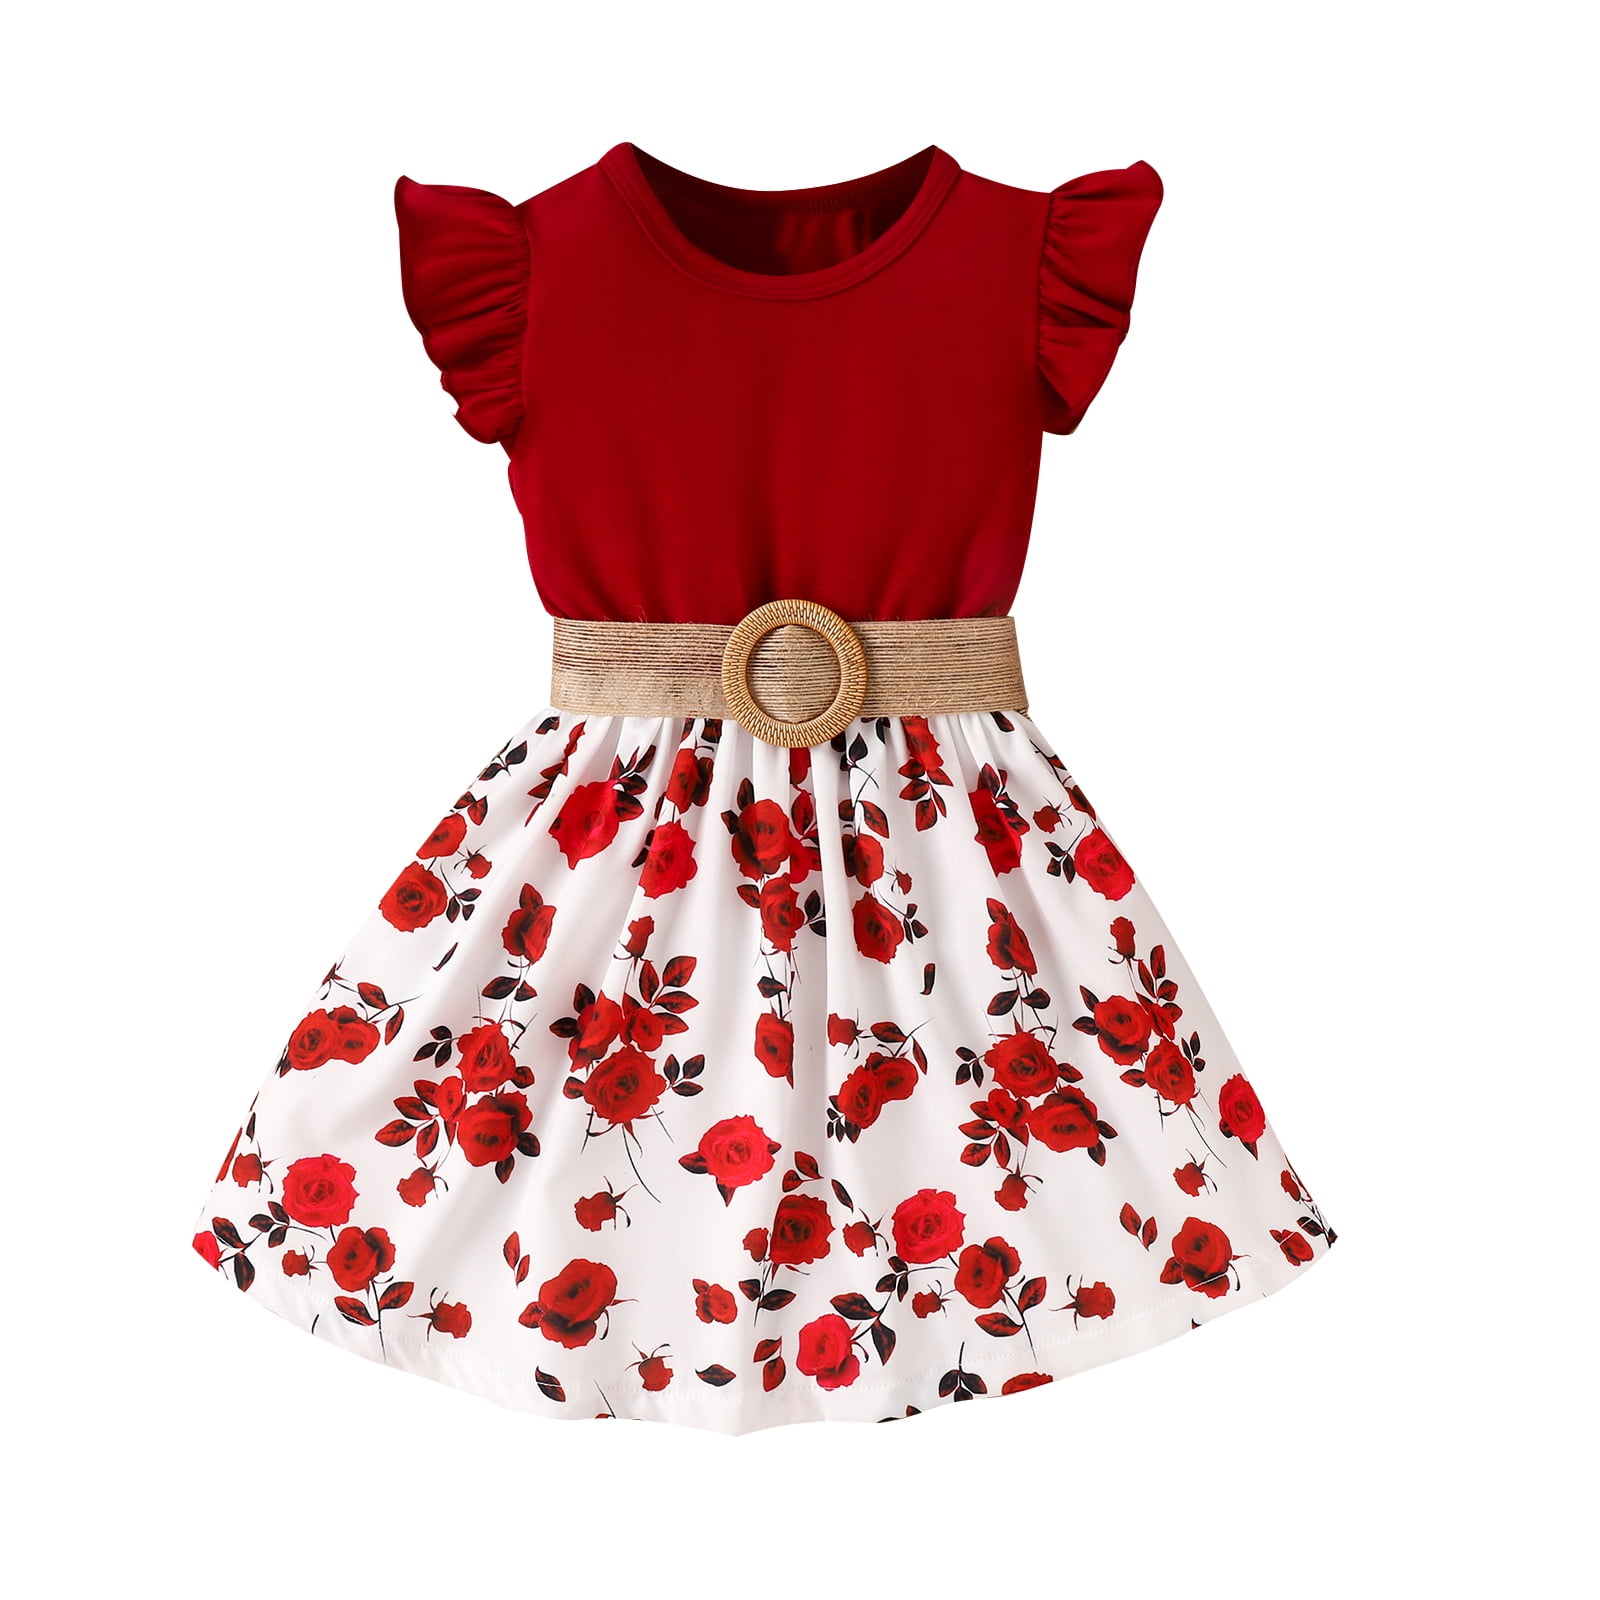 Kids Girls Fashion Dress 4T 5T 6T 7T Children Summer Clothing Ruffle ...